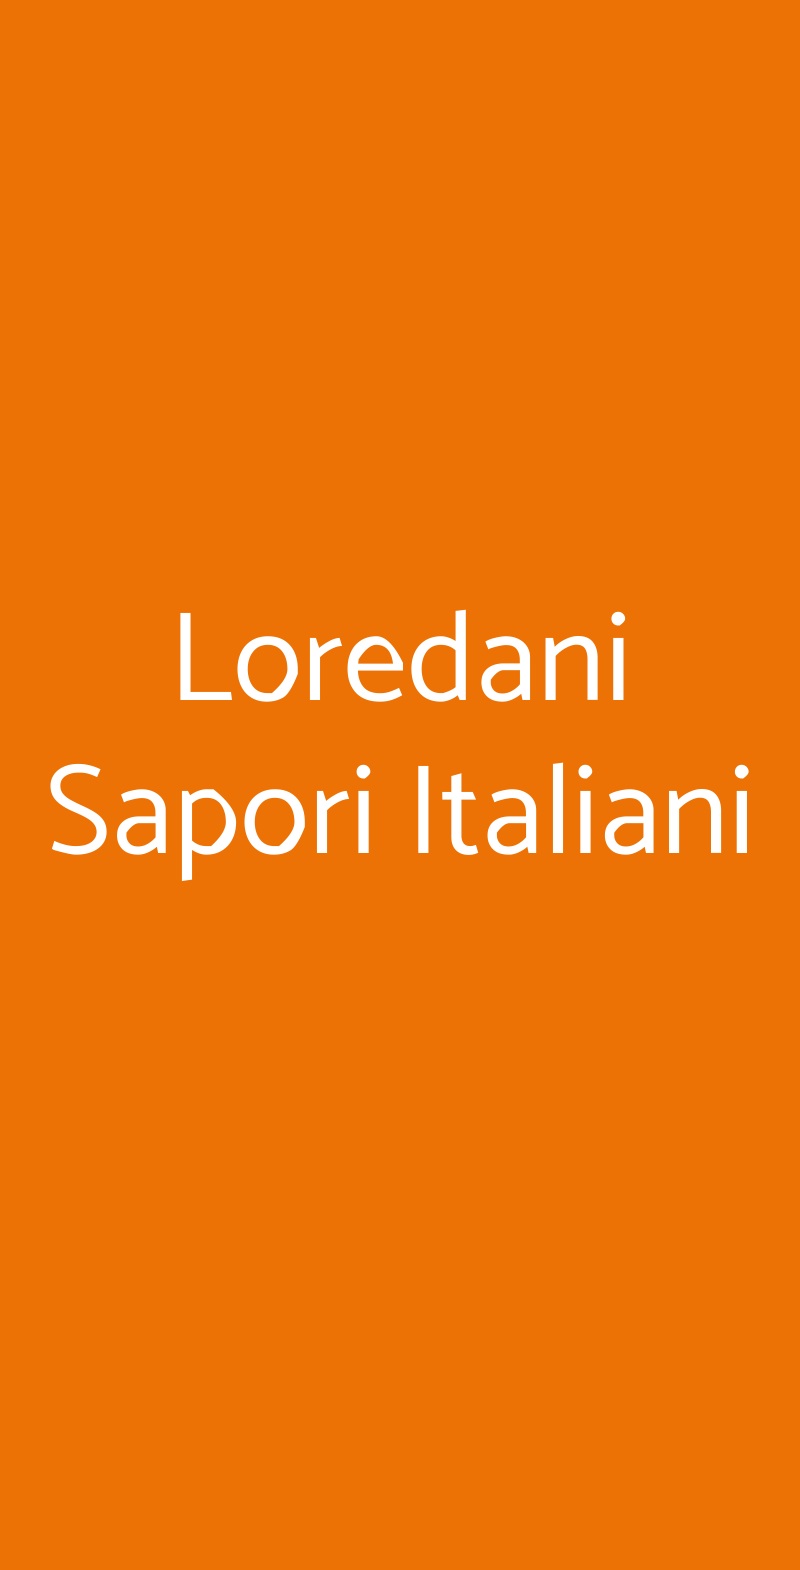 Loredani Sapori Italiani Milano menù 1 pagina